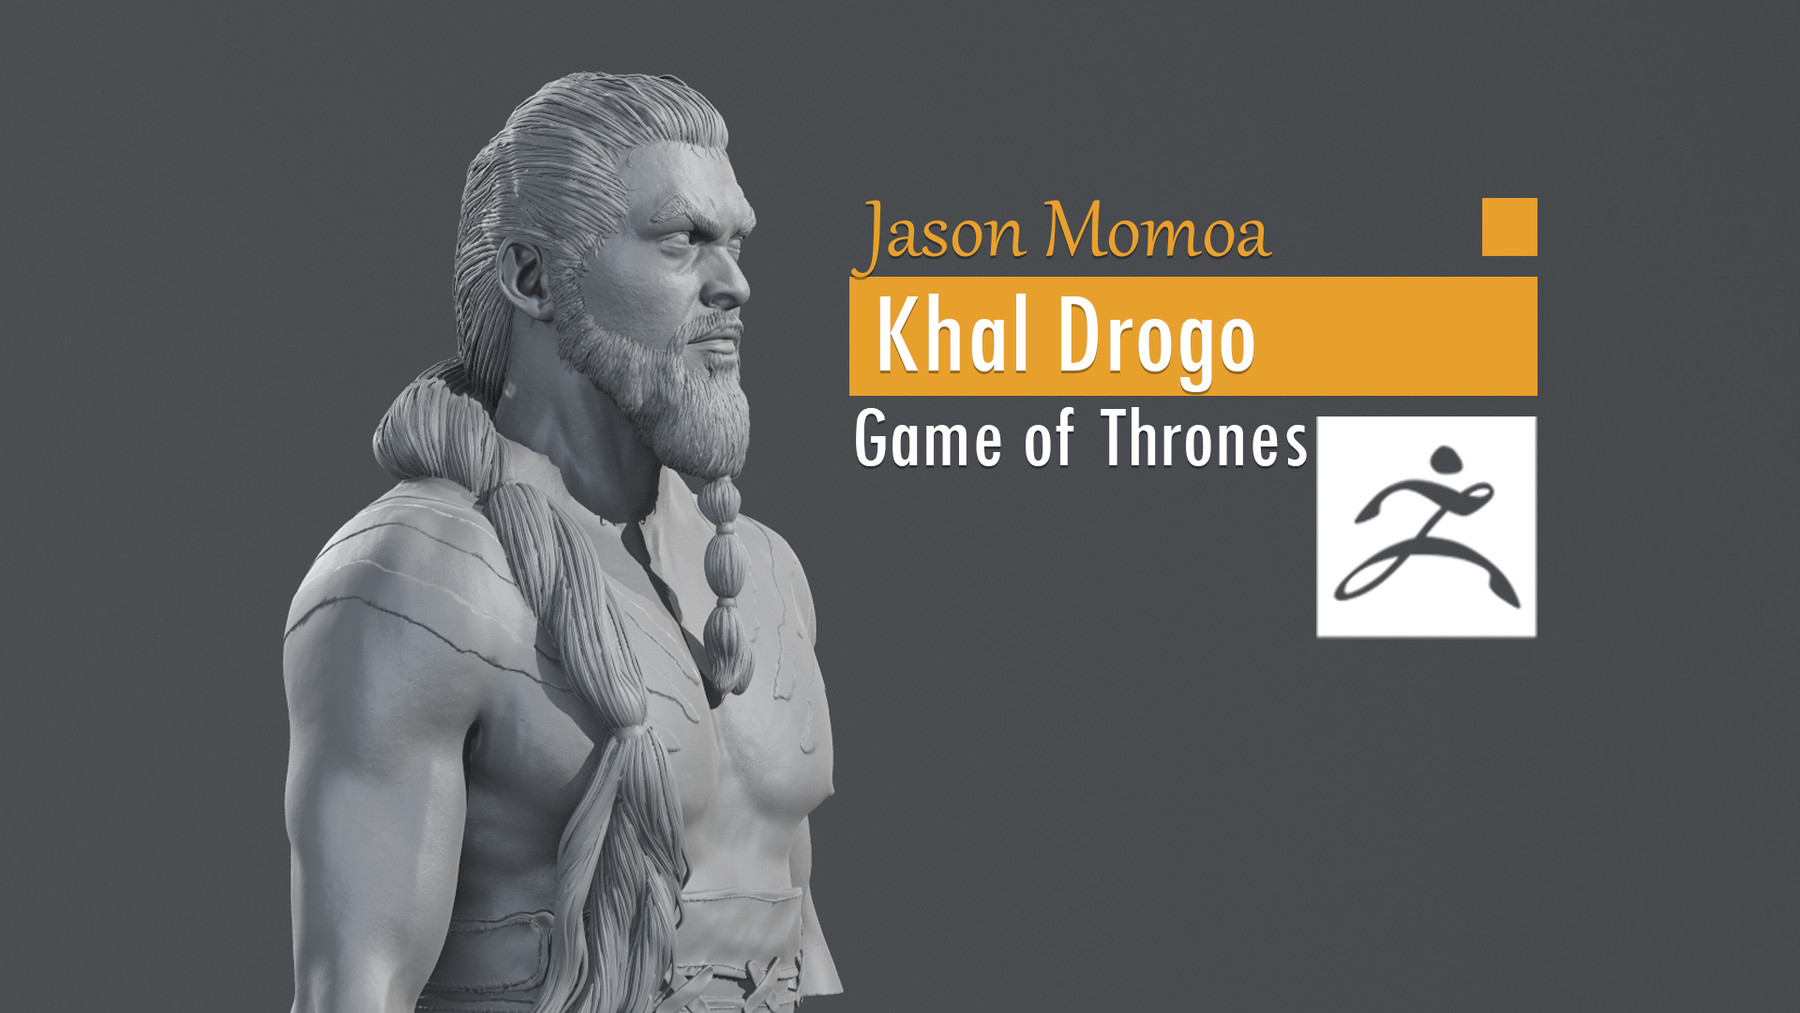 Jason Momoa Khal Drogo Game of Thrones SIGNED FRAMED PHOTO CD Disc Perfect gift 